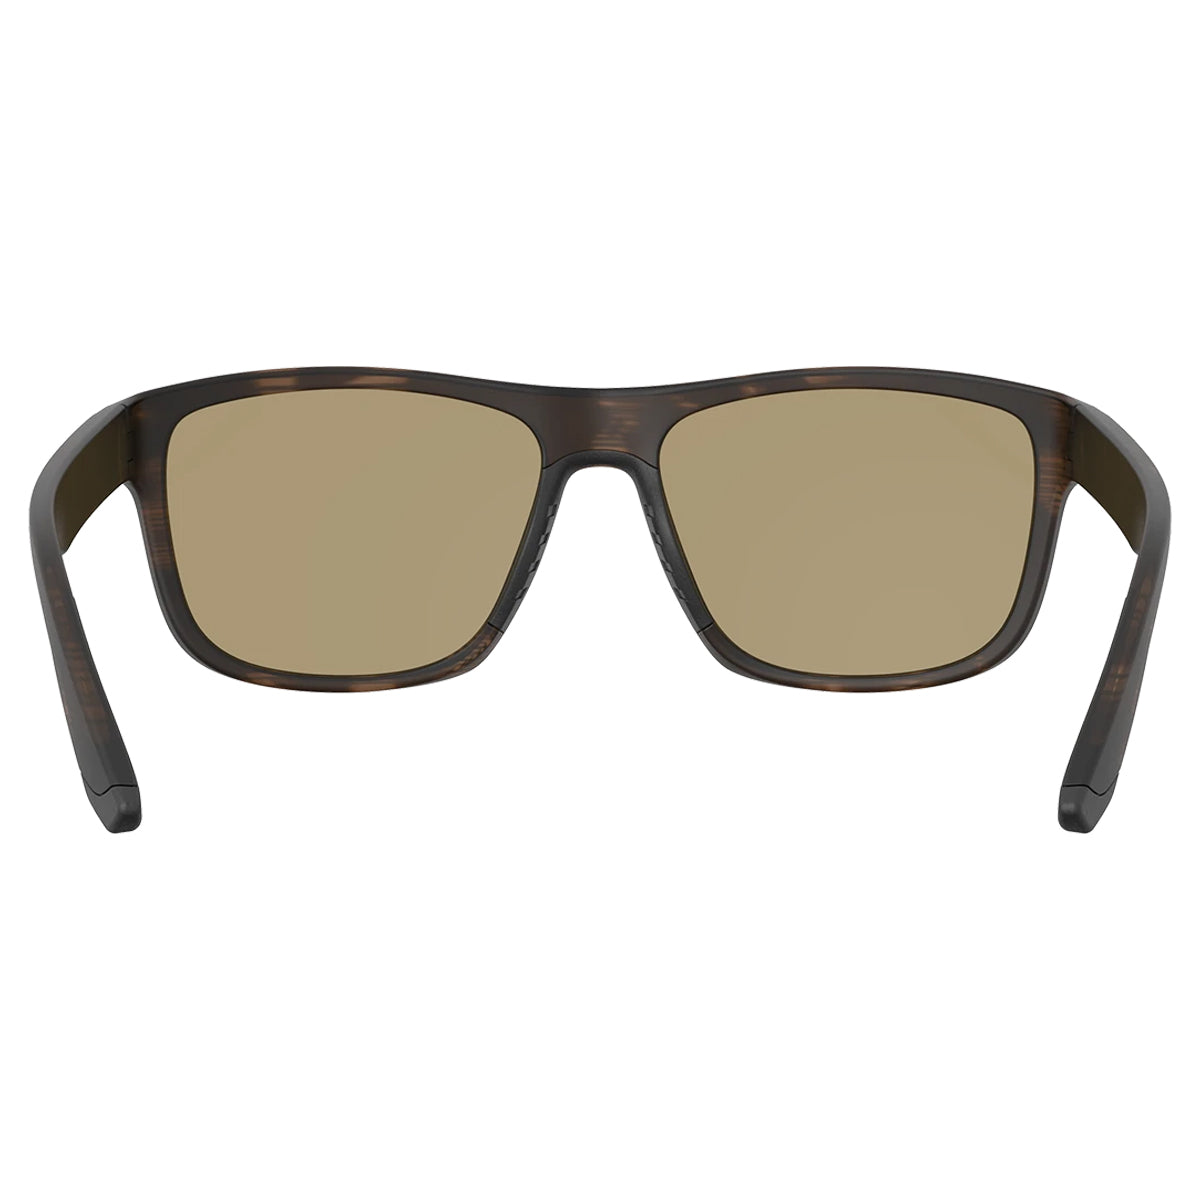 Leupold Katmai Sunglasses in  by GOHUNT | Leupold - GOHUNT Shop